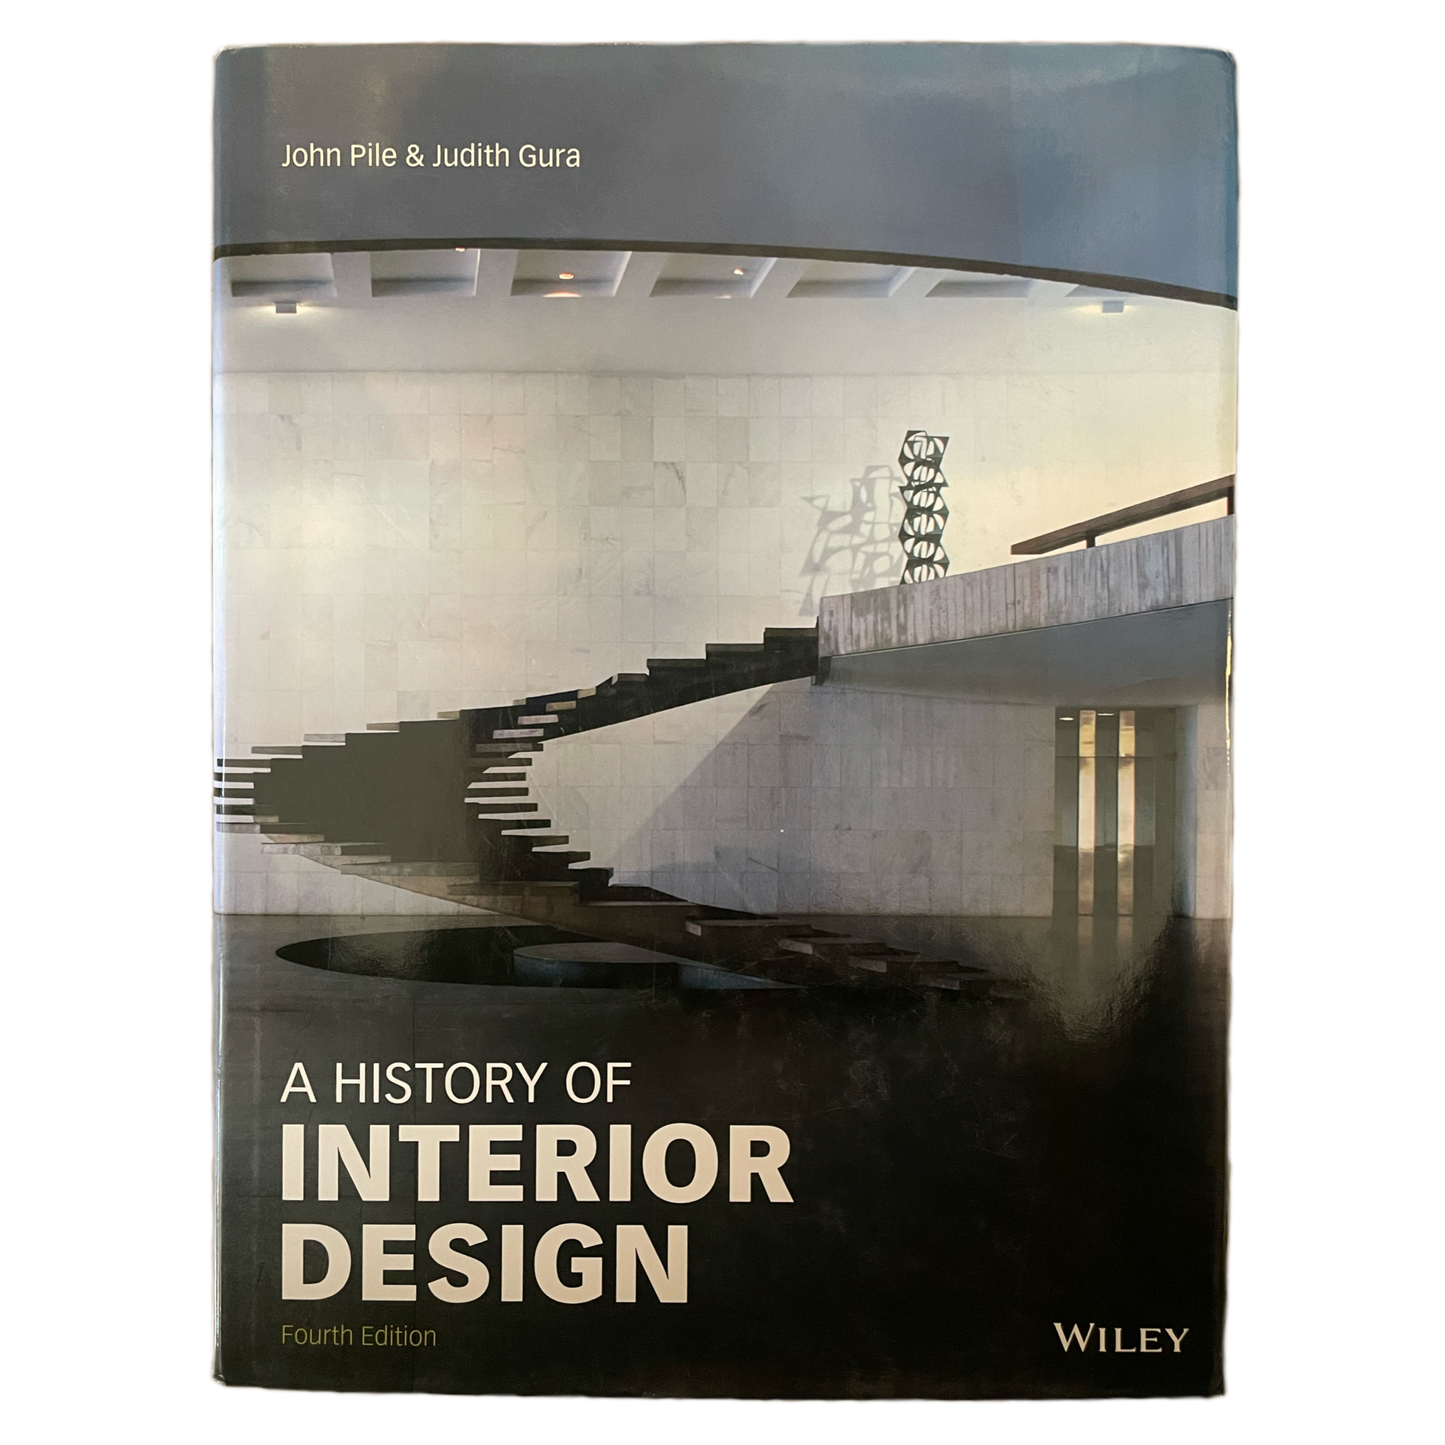 A History of Interior Design by John Pile & Judith Gura